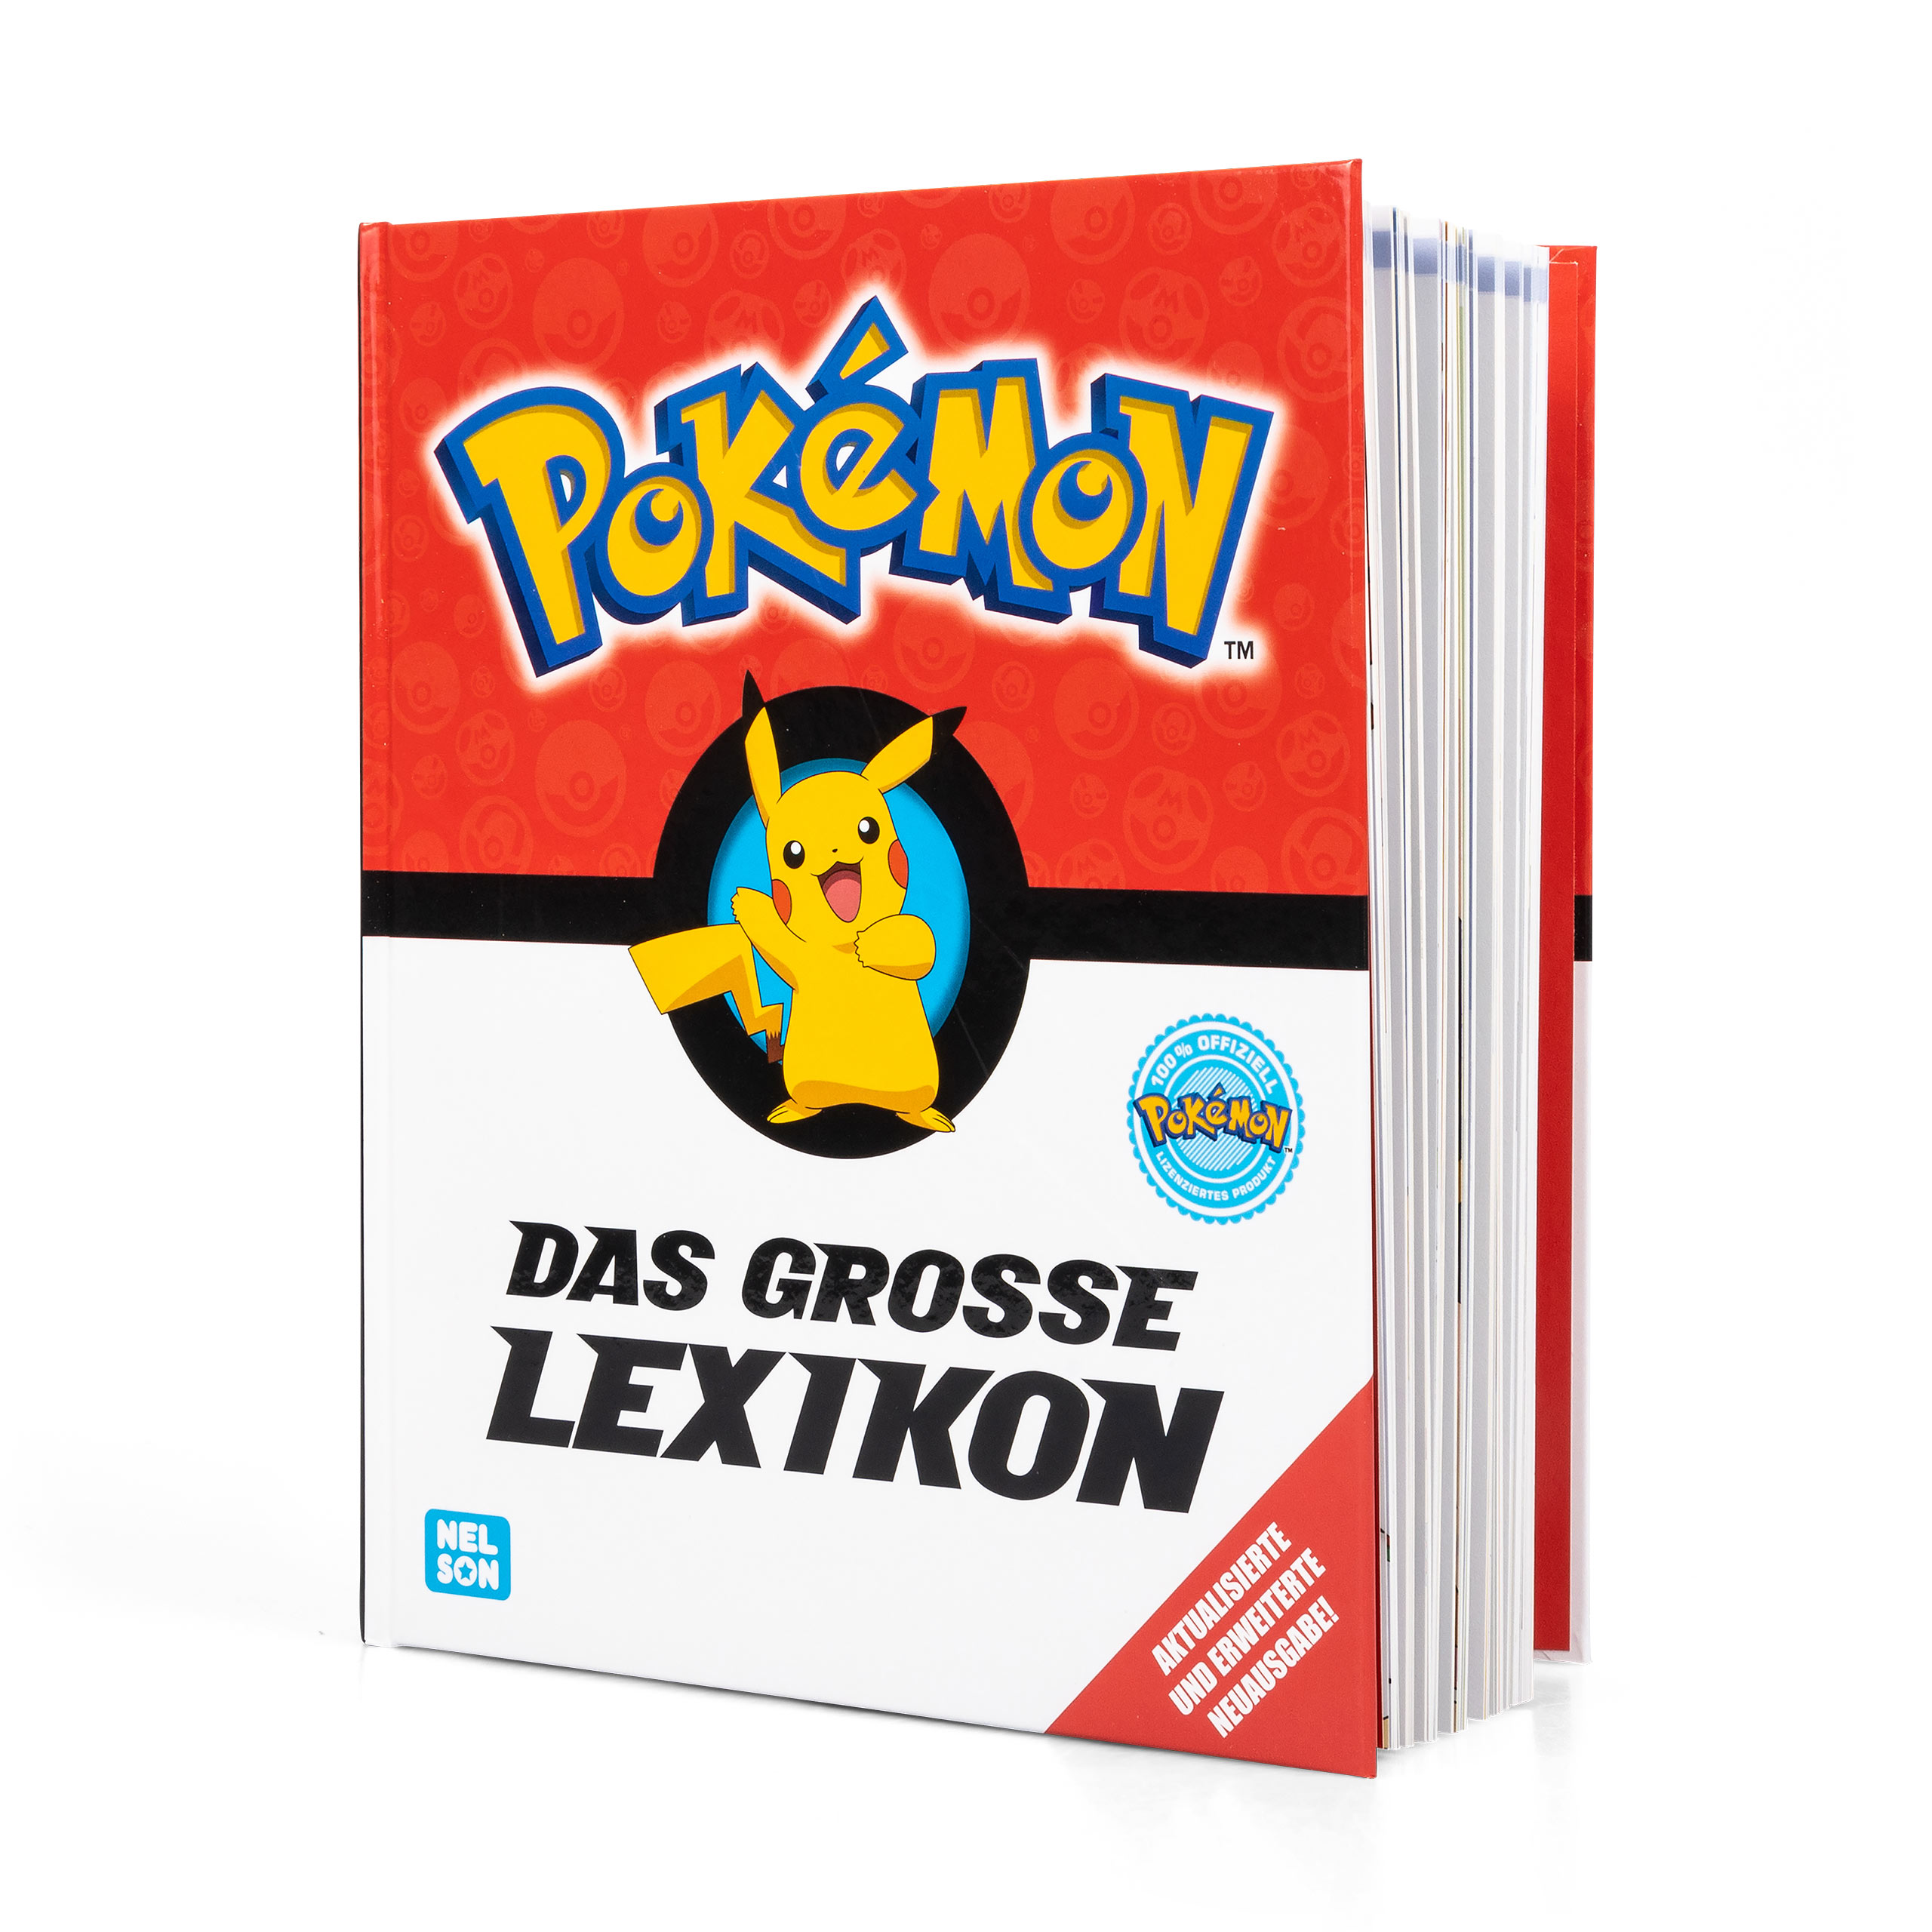 Pokemon - The Big Lexicon